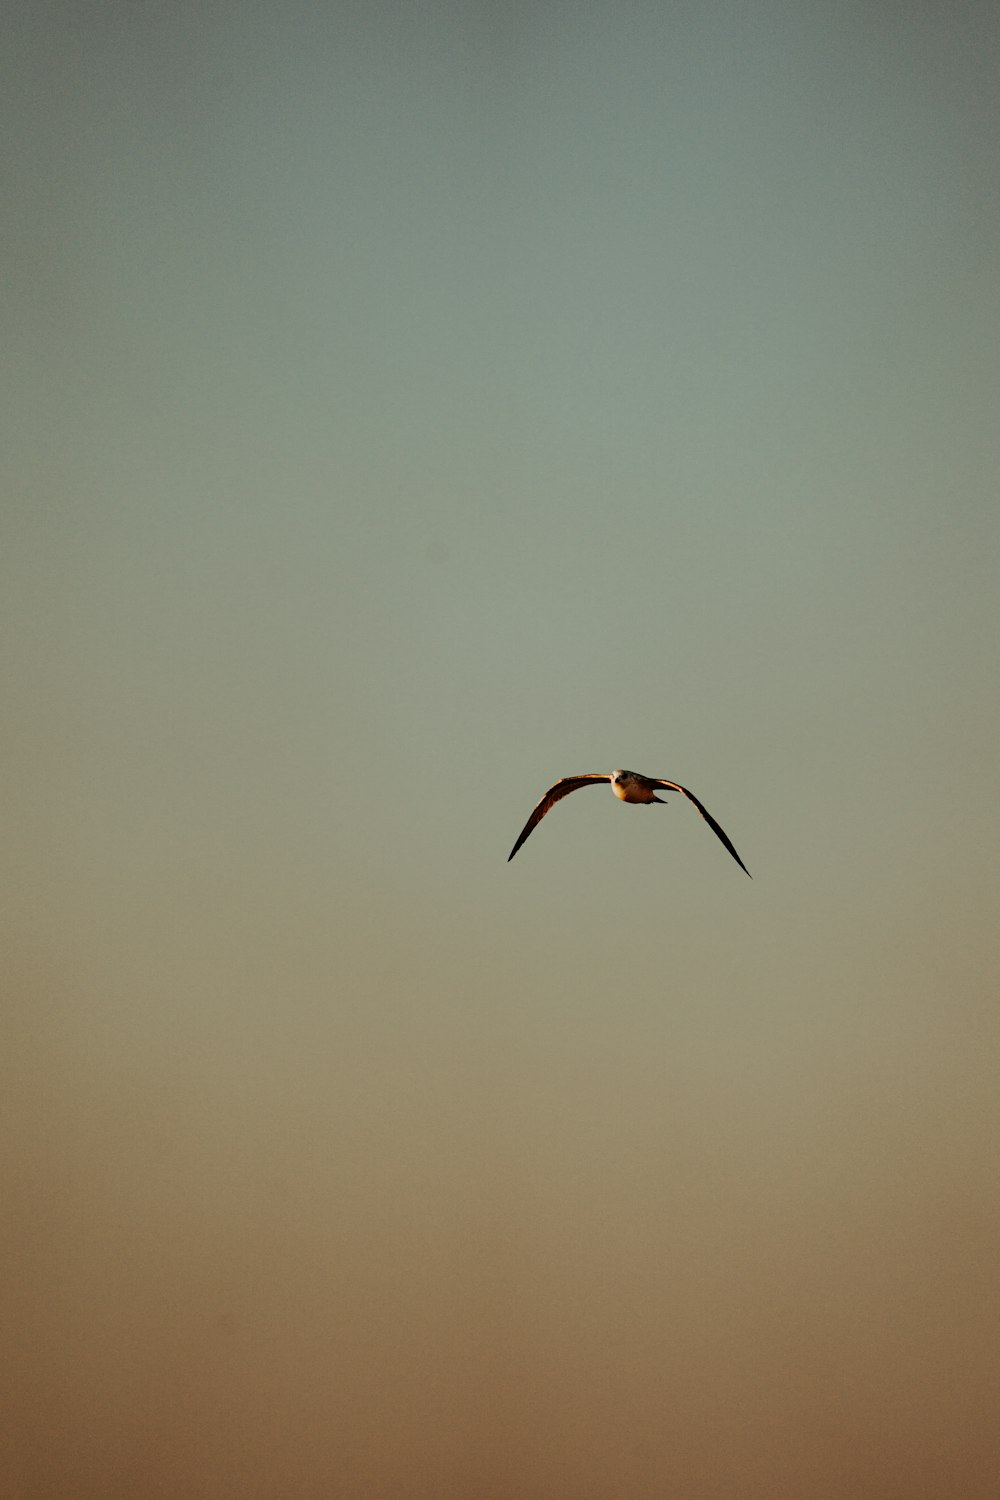 brown bird flying in mid air